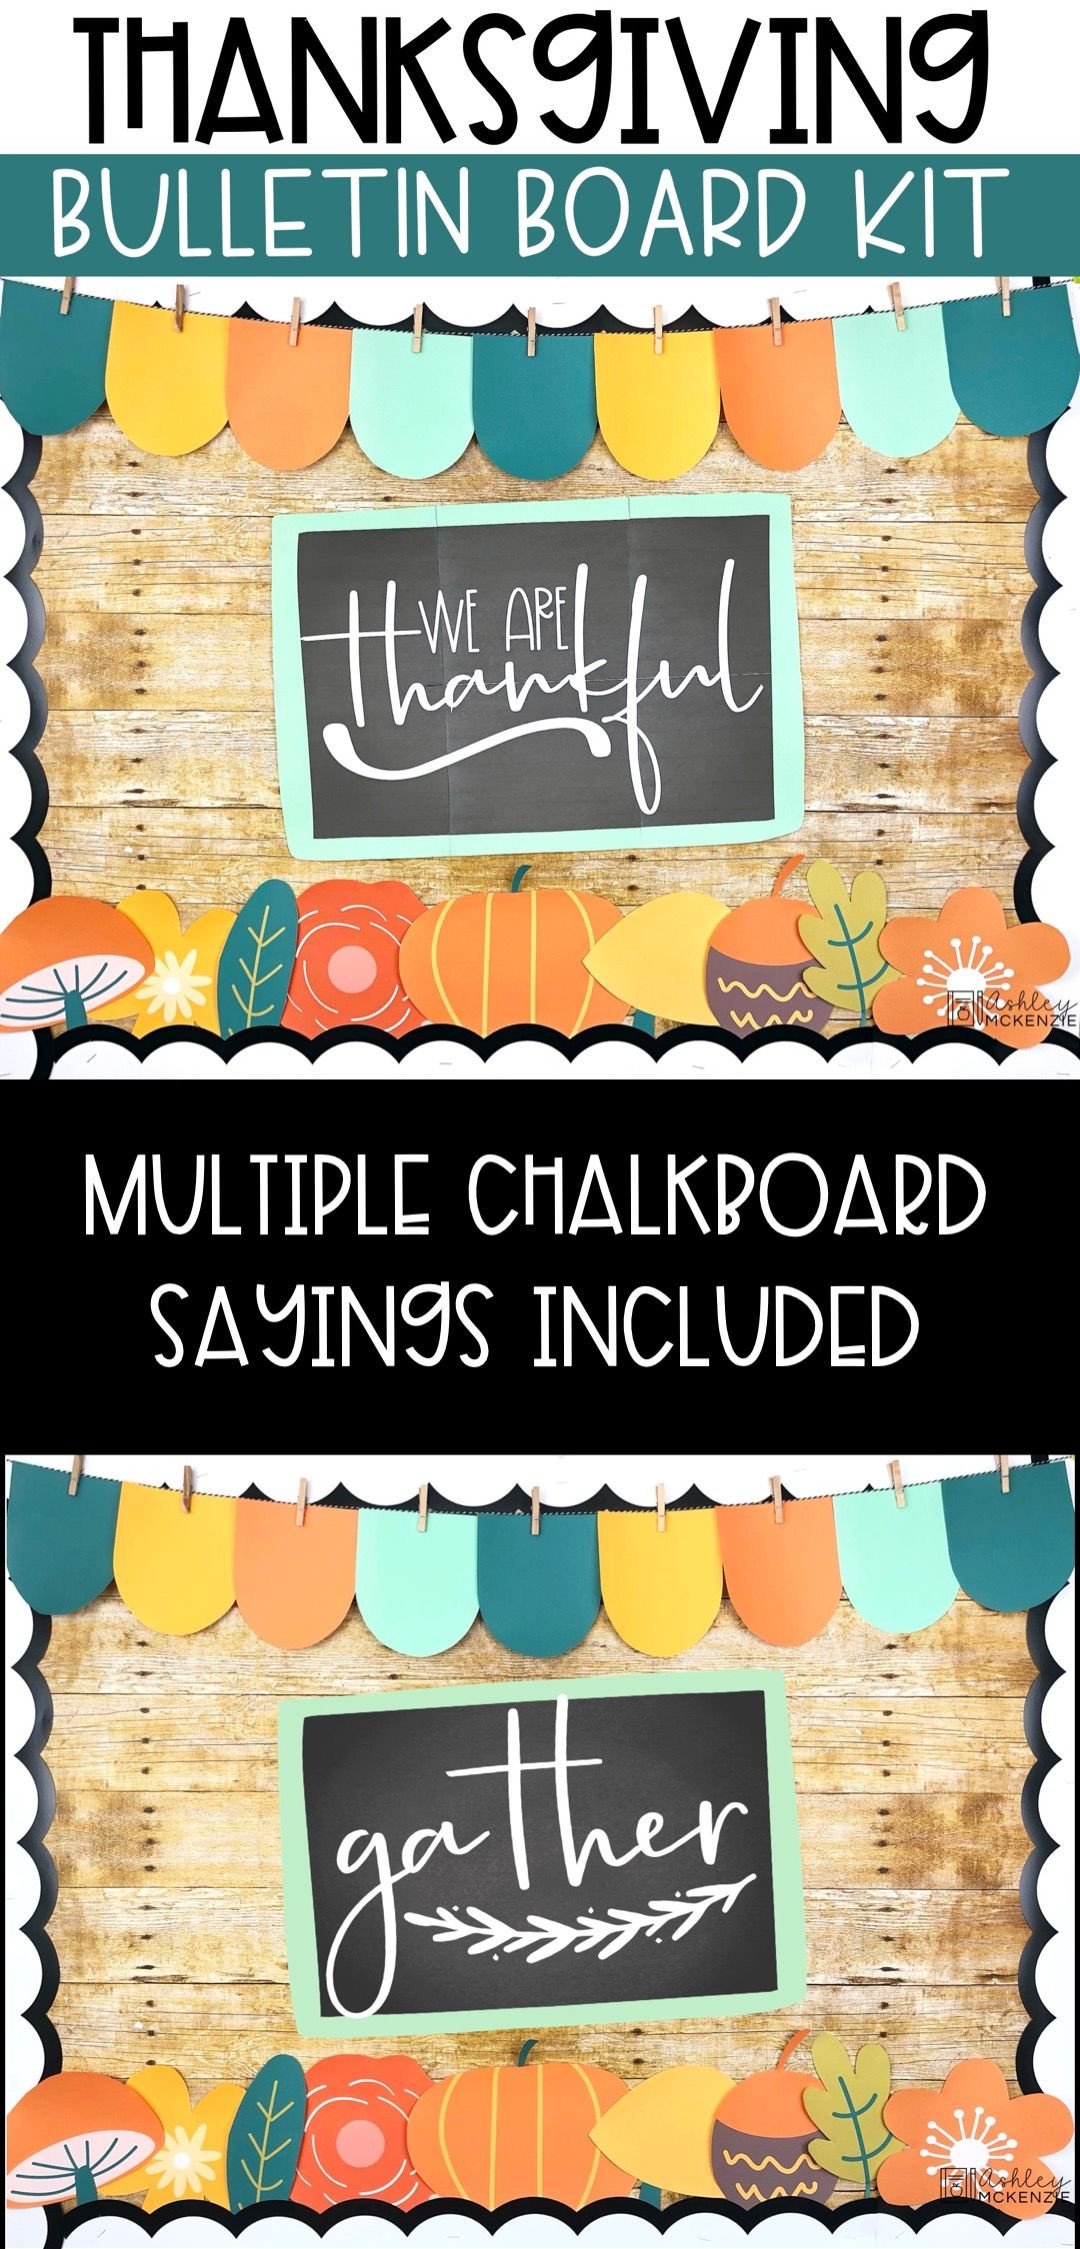 Thanksgiving Quotes Board
 Thanksgiving Bulletin Board Kit Chalkboard Theme